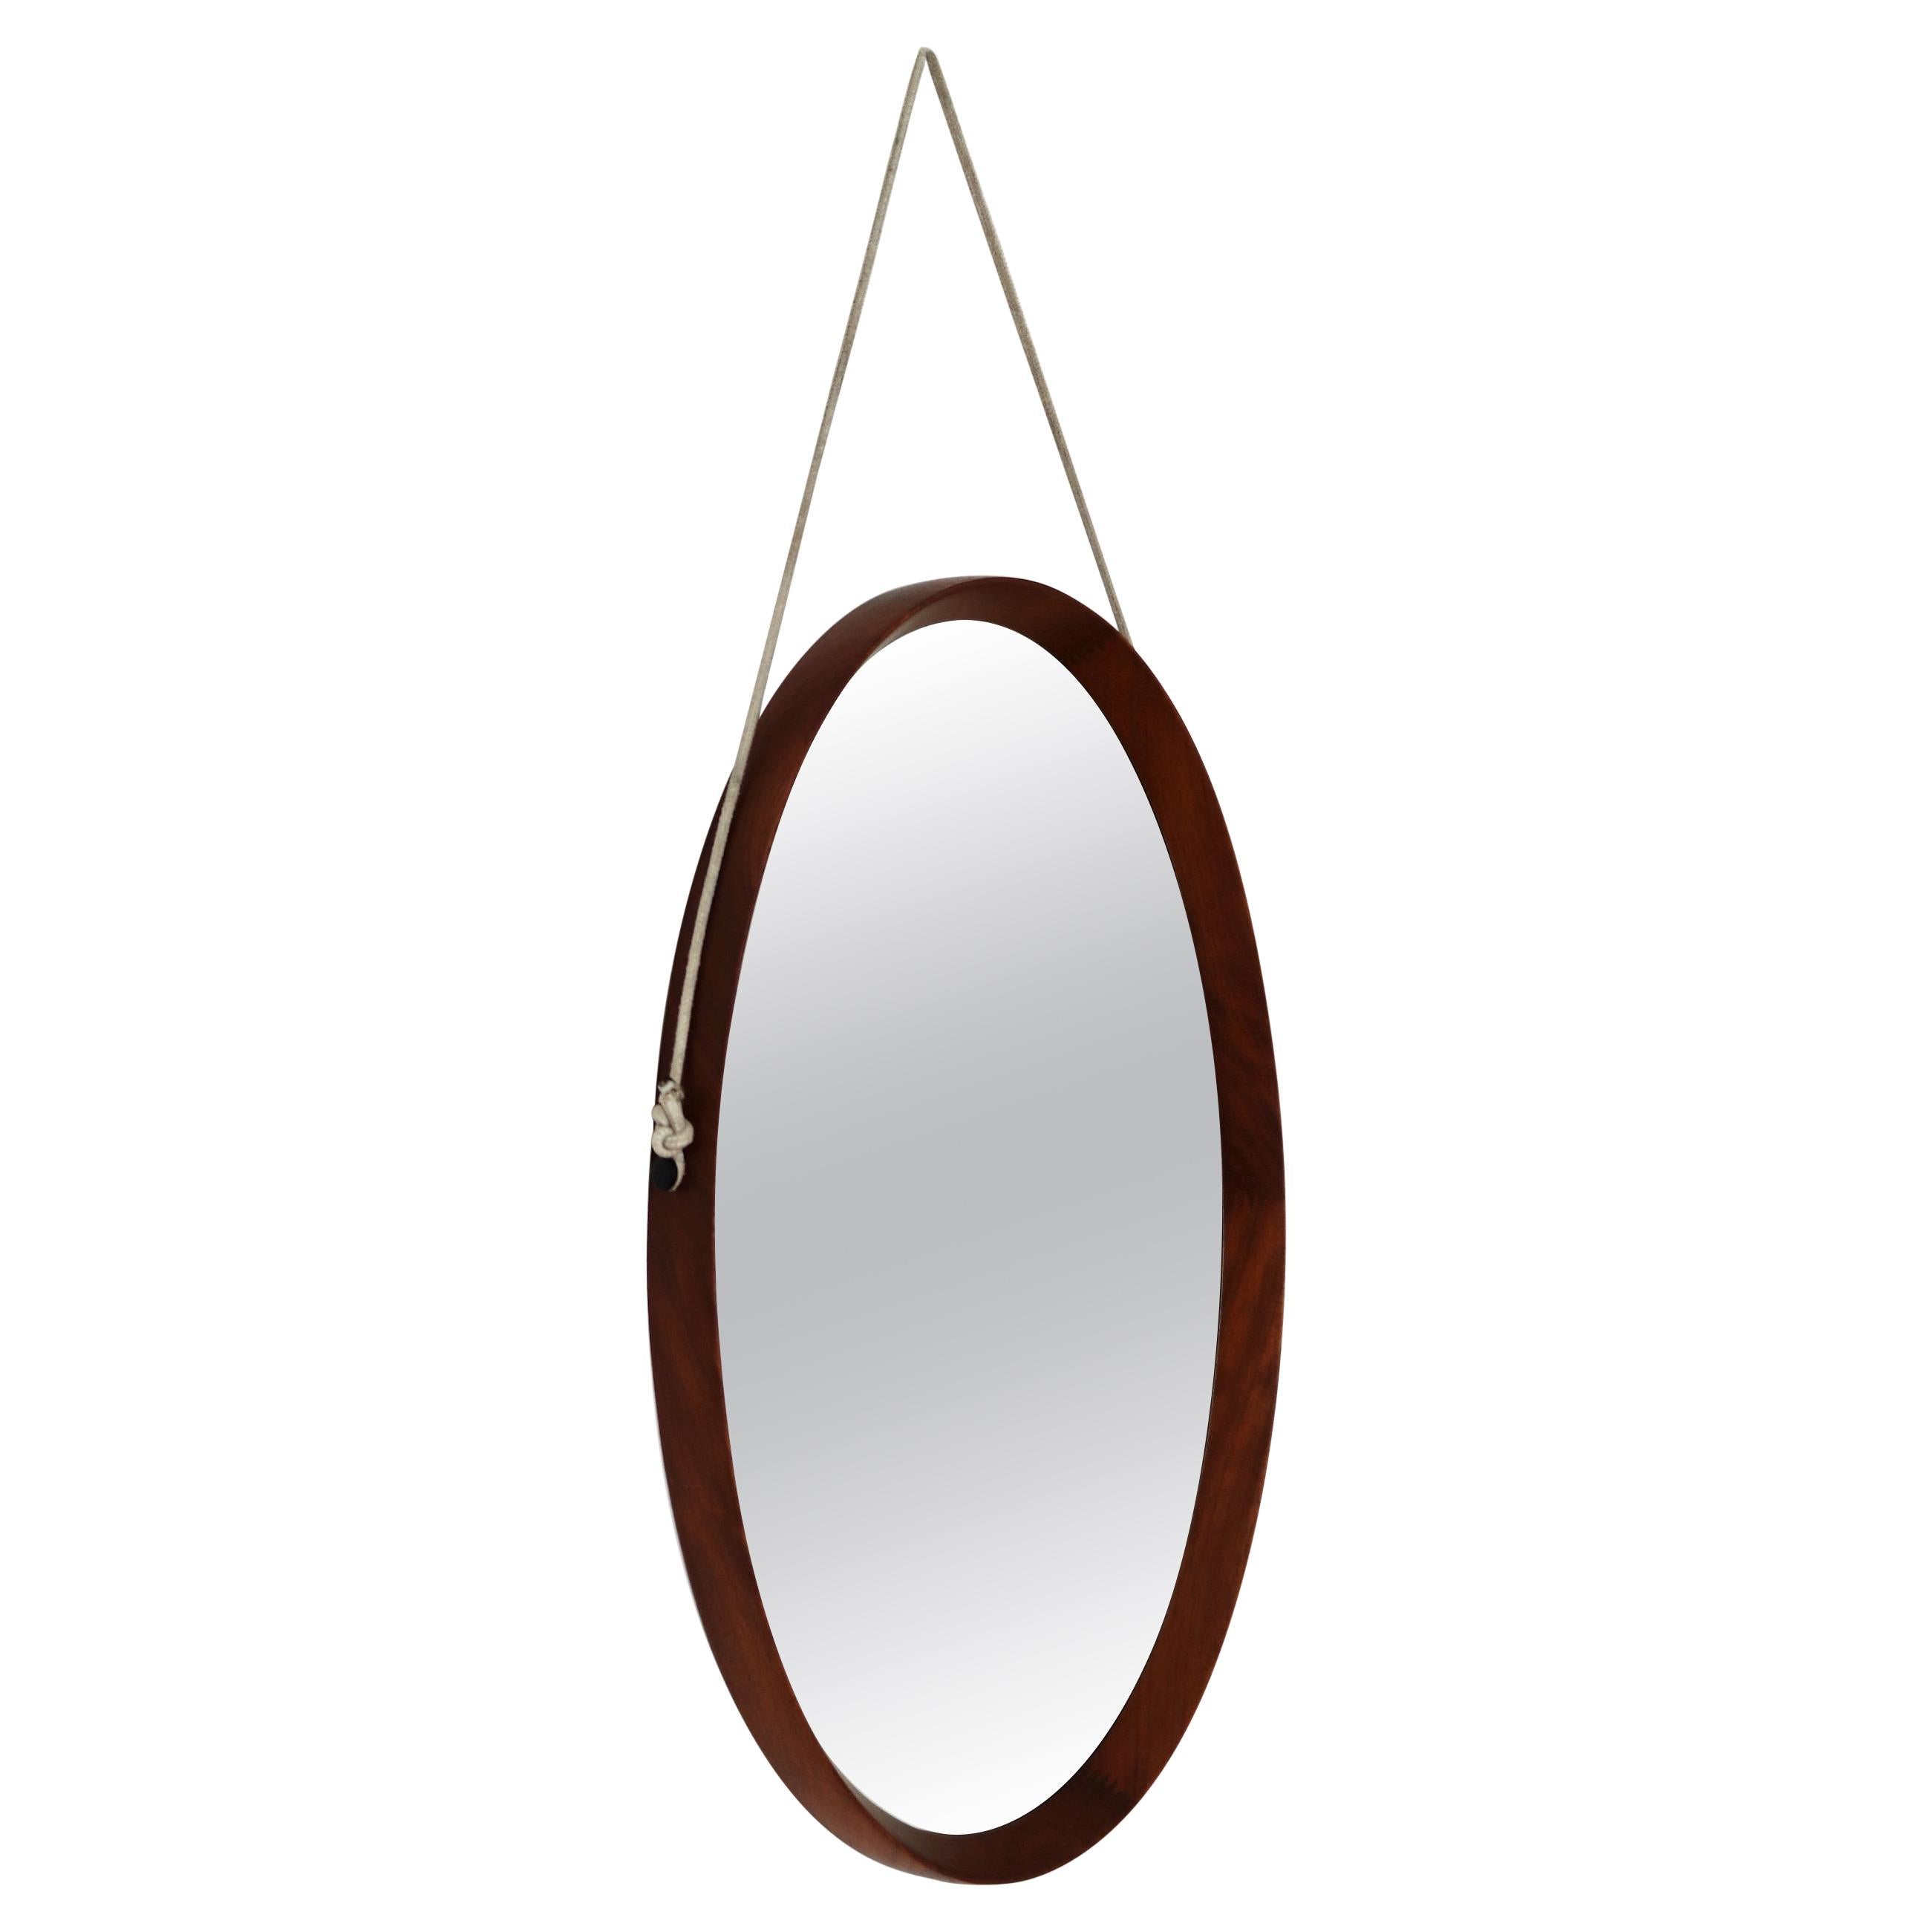 Italian Midcentury Round Wall Mirror In Teak 1960s For Sale At 1stdibs 